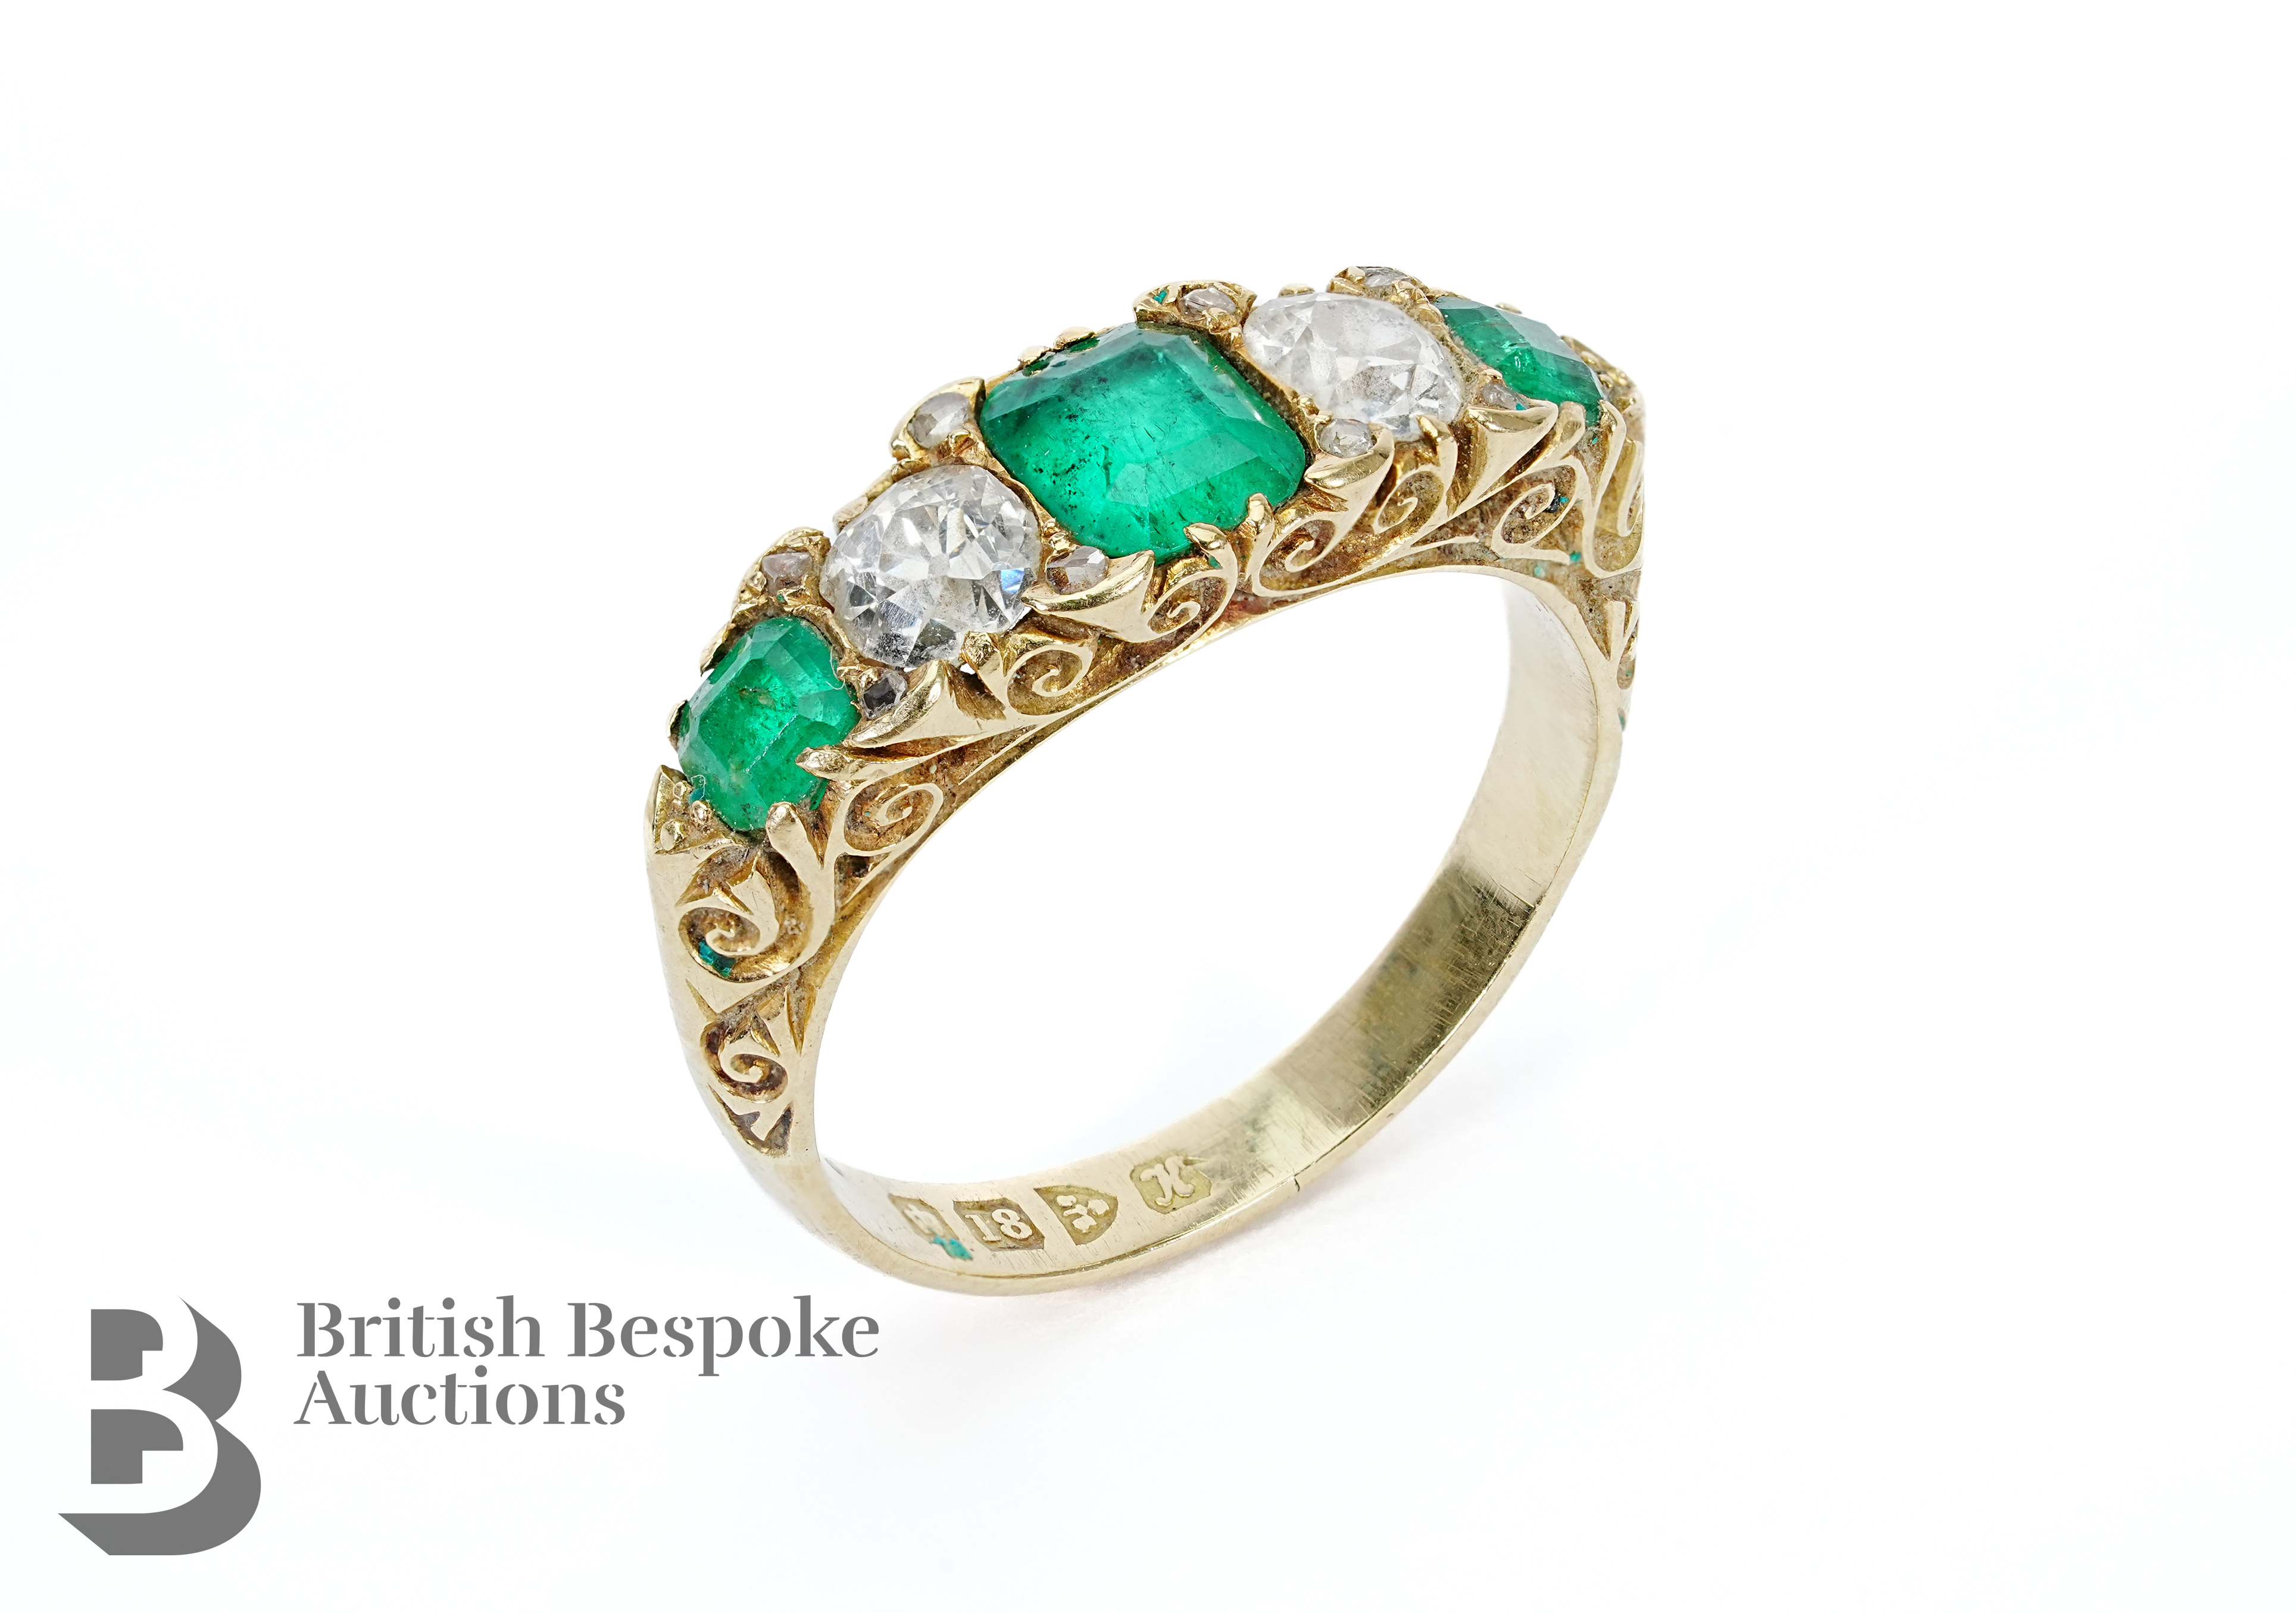 Antique Emerald and Diamond Ring